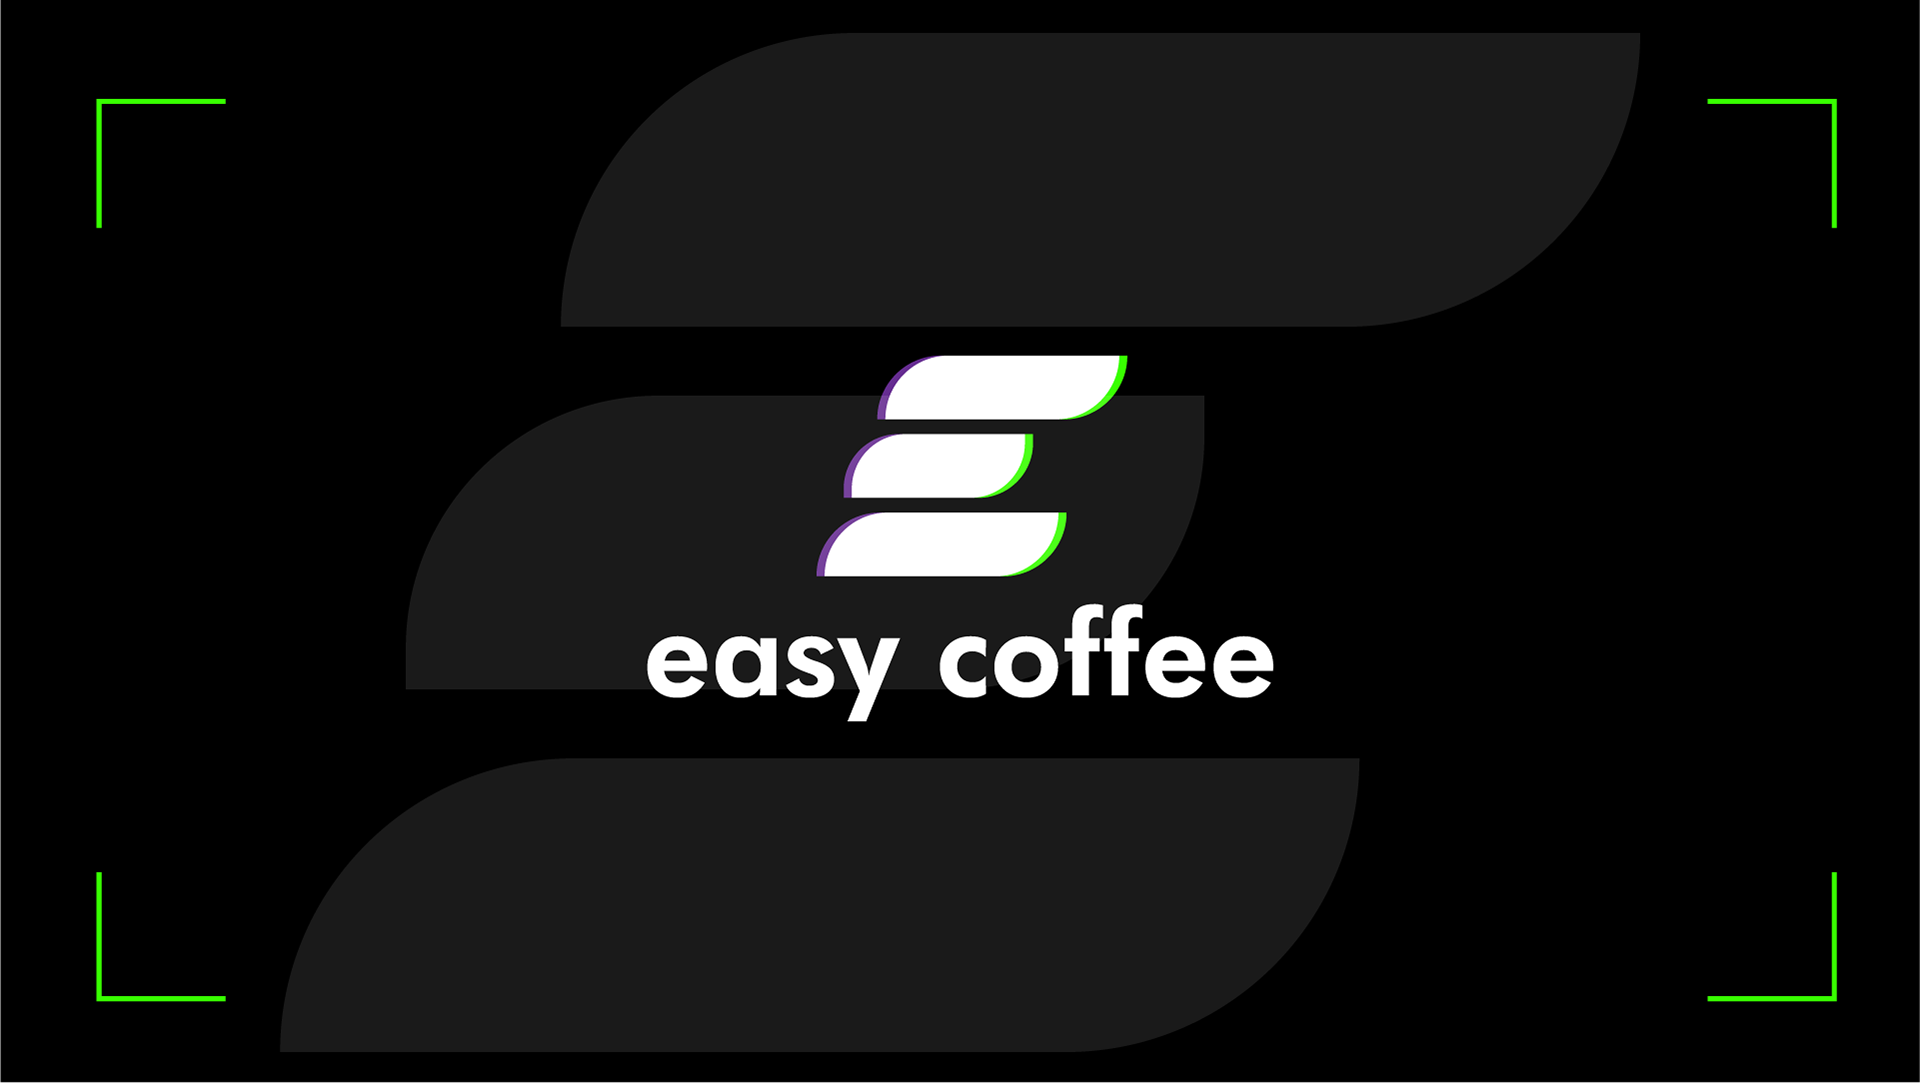 Easy easily. Easy Coffee.